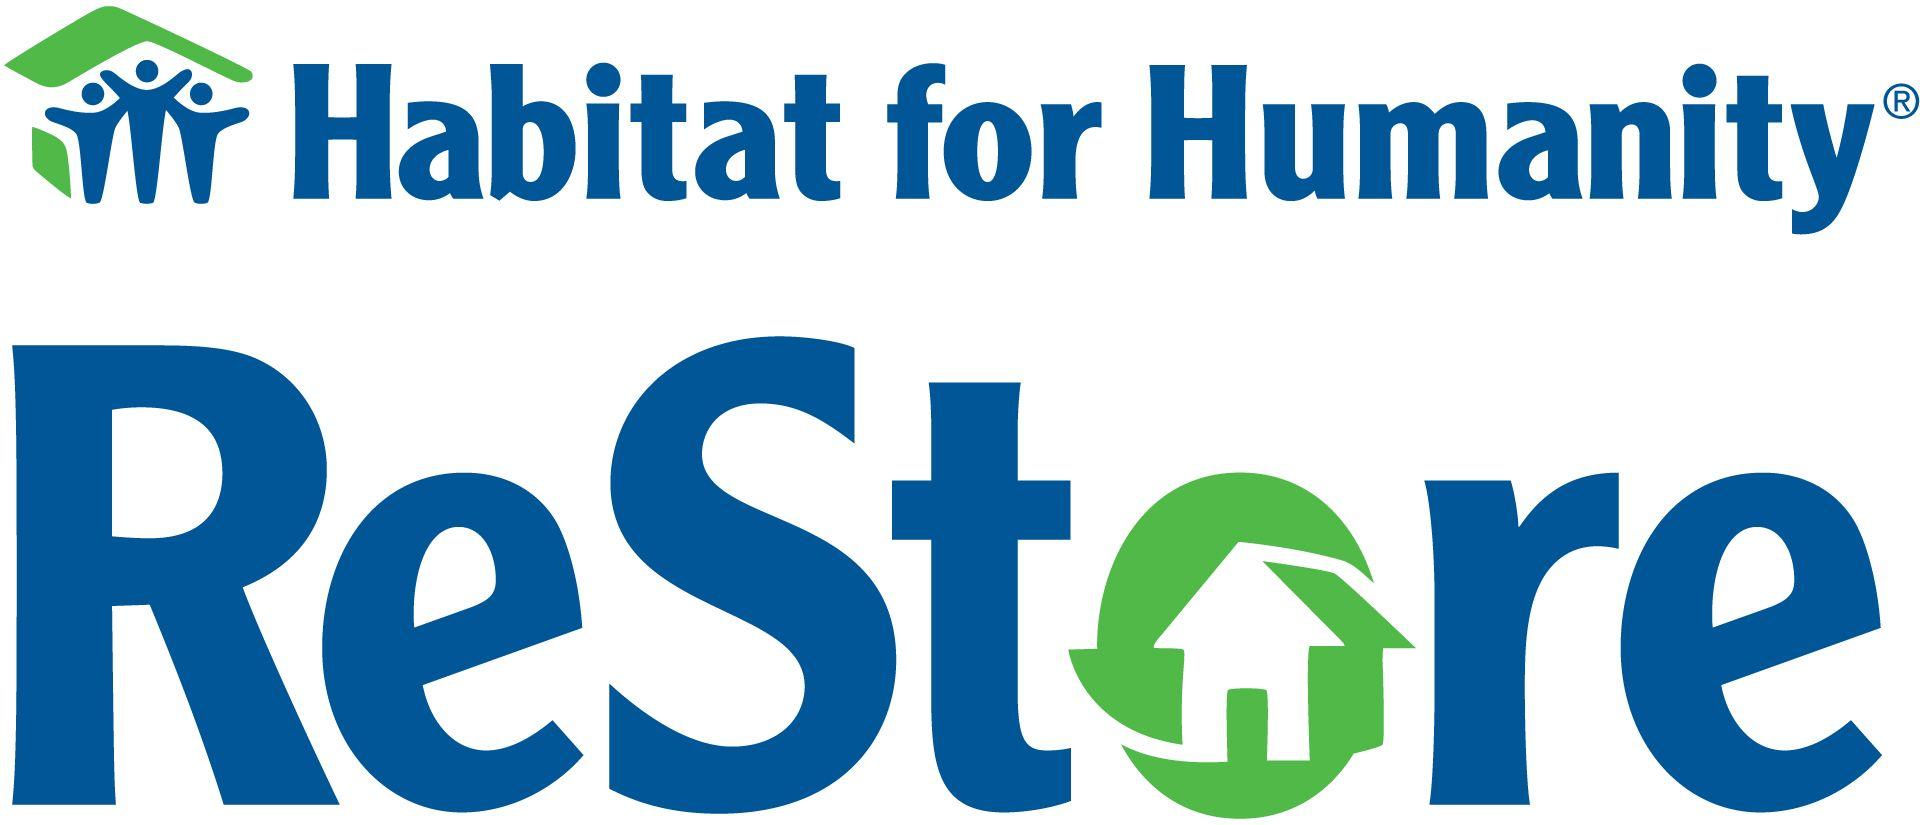 Habitat for Humanity Logo - ReStore Logo New HI RES. Habitat For Humanity Prince William County